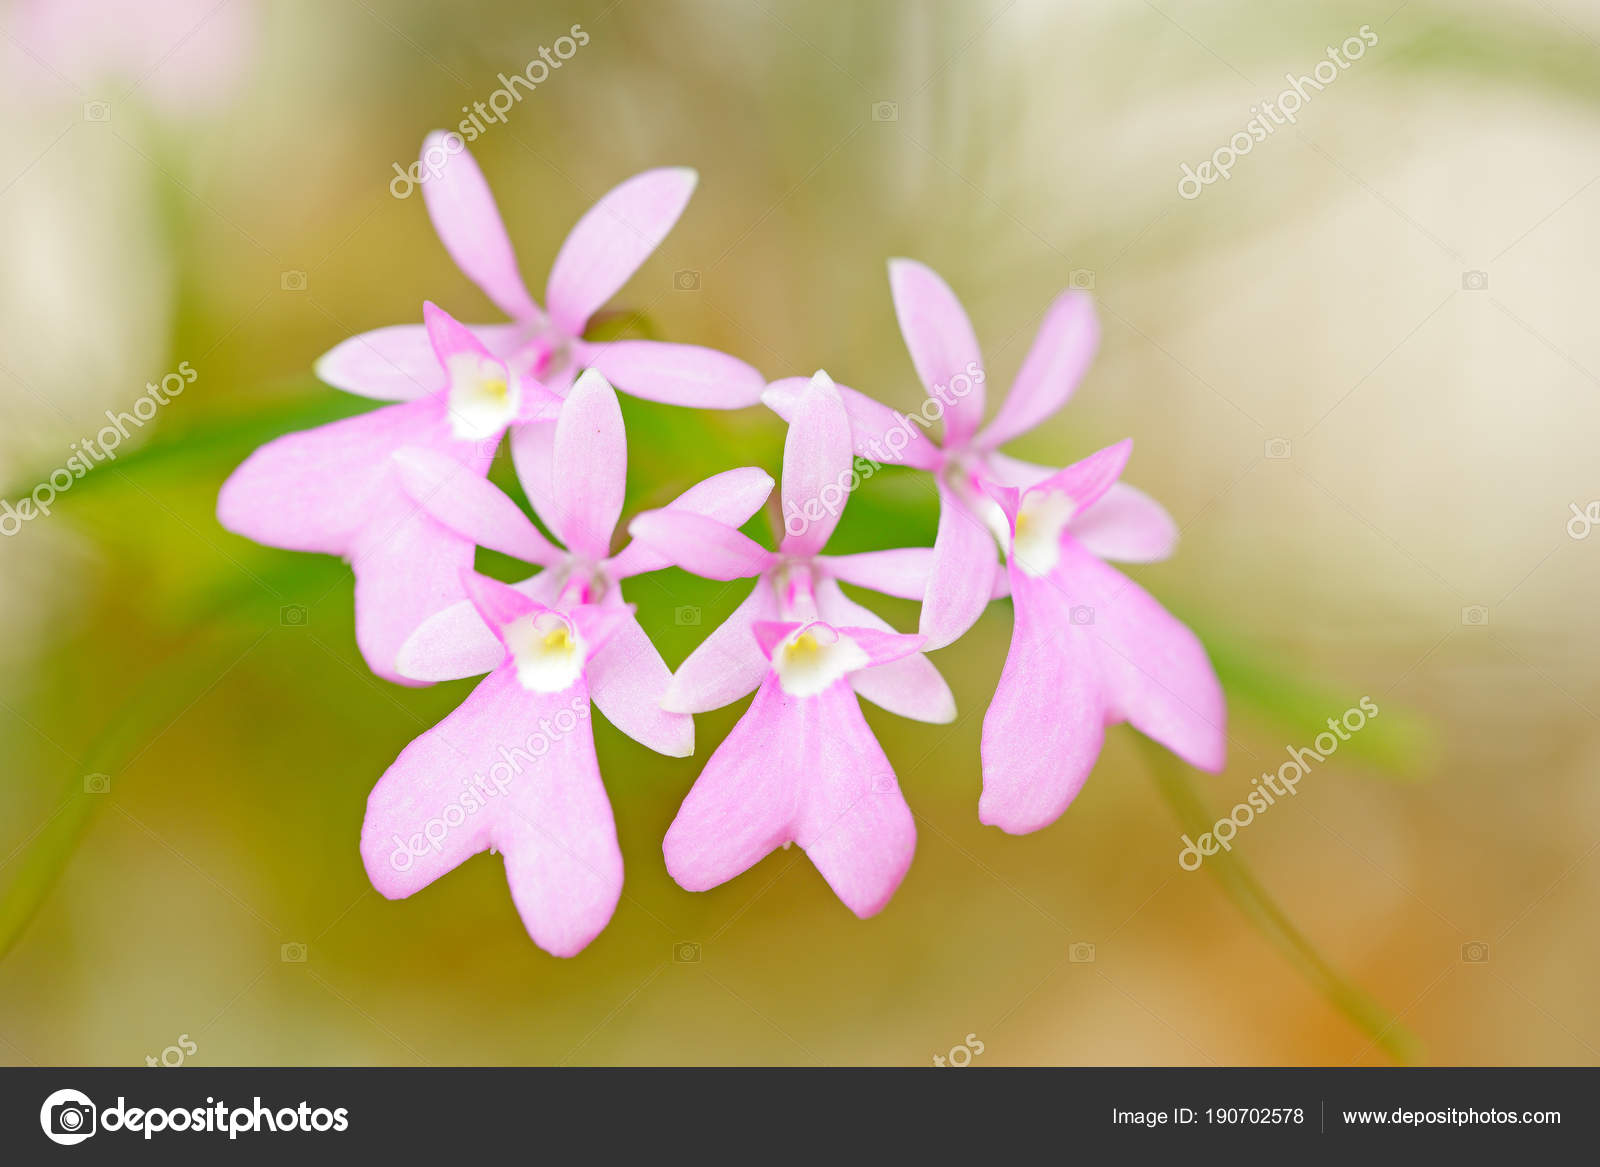 Hermosa flor de orquídea: fotografía de stock © OndrejProsicky #190702578 |  Depositphotos